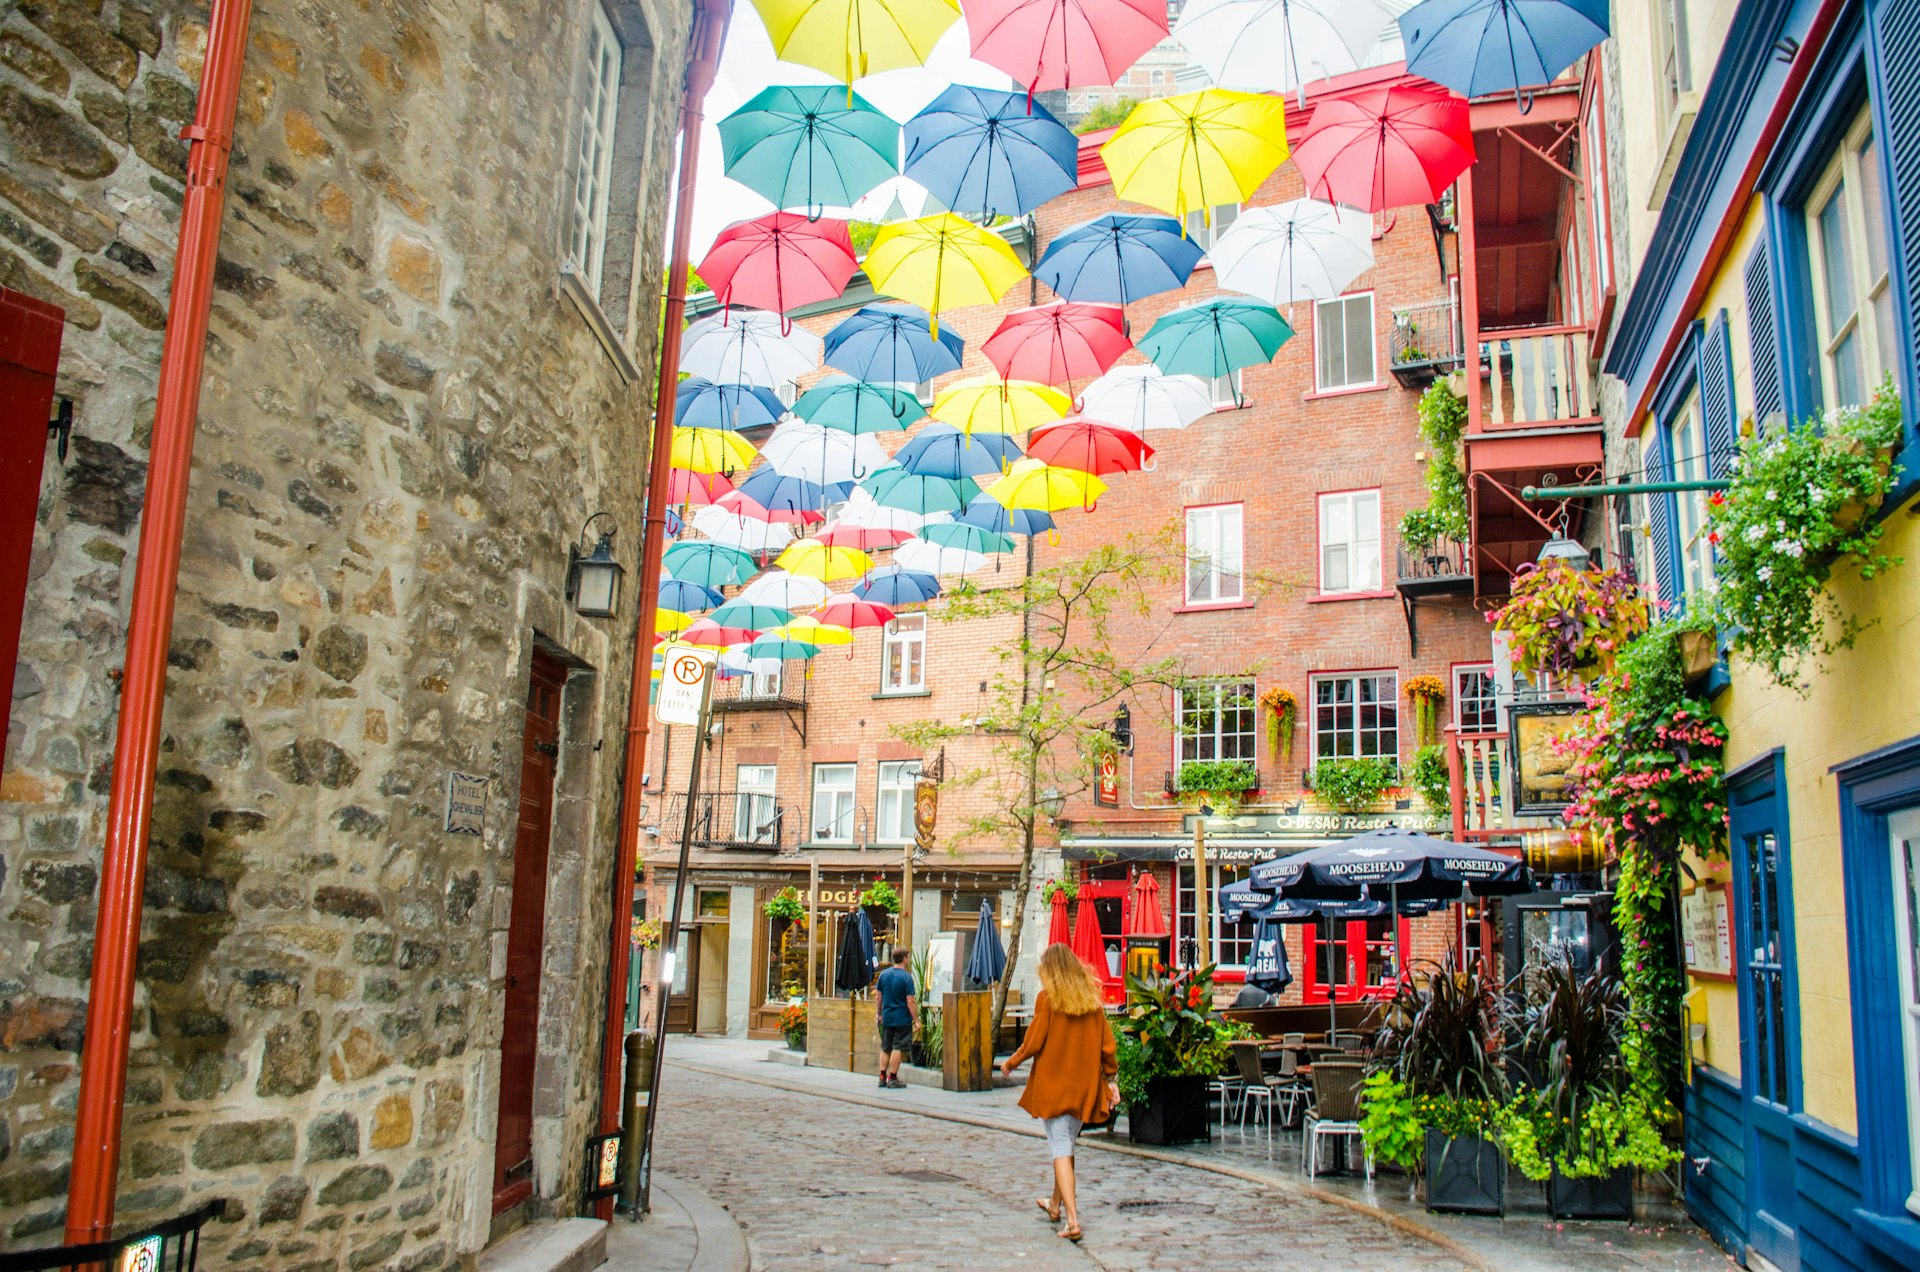 Umbrellas suspended above a cobblestoned street in Québec.